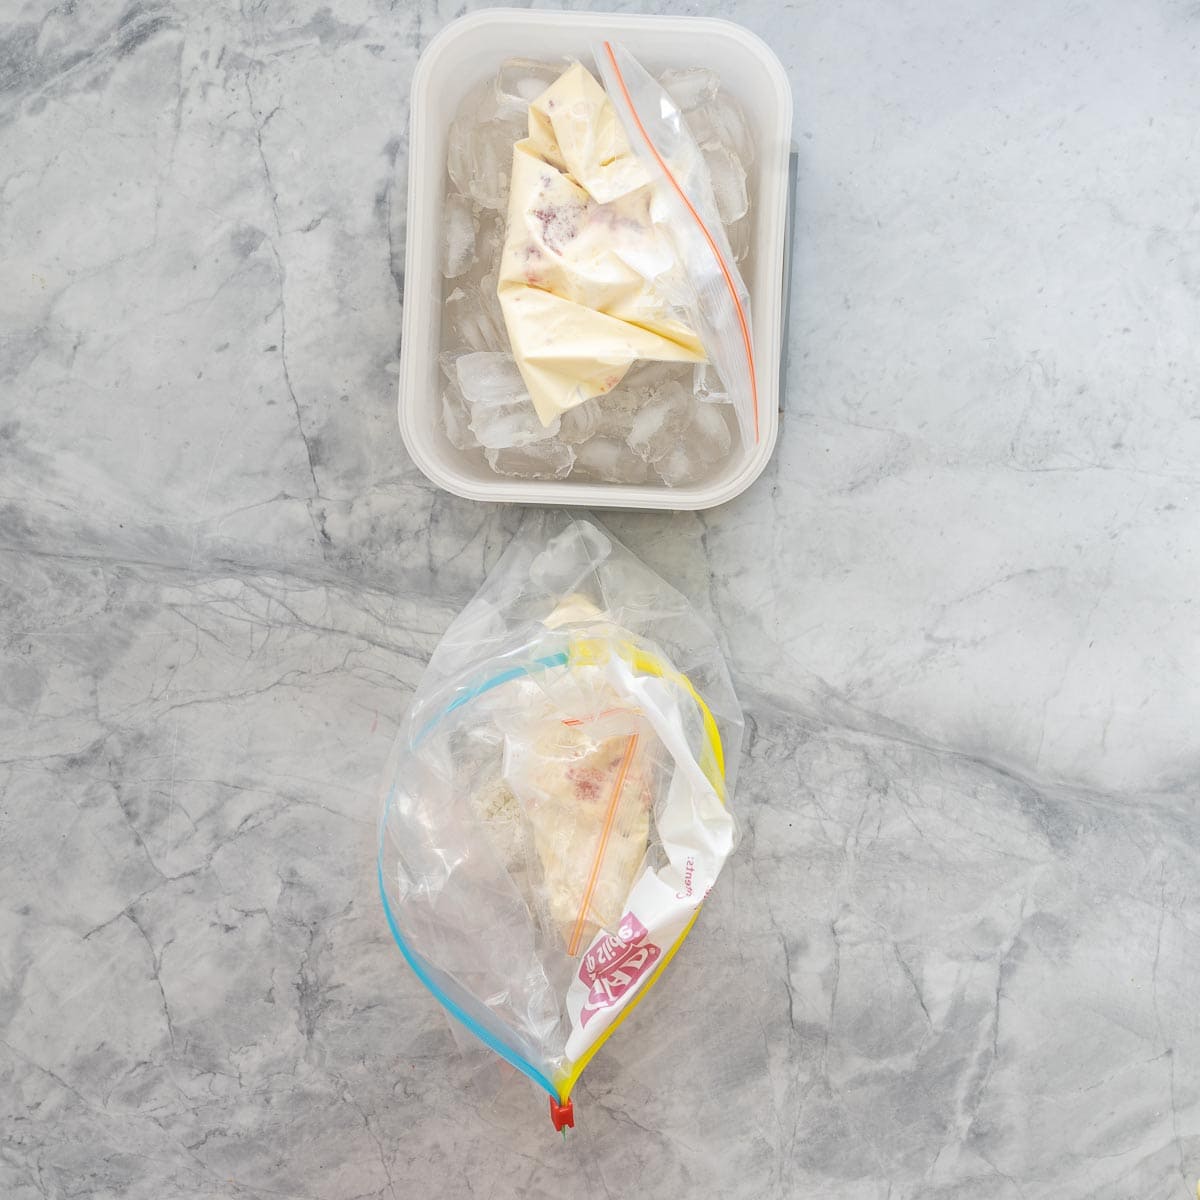 A small zip lock bag of ice cream ingredients inside a big zip lock bag of ice and salt. 